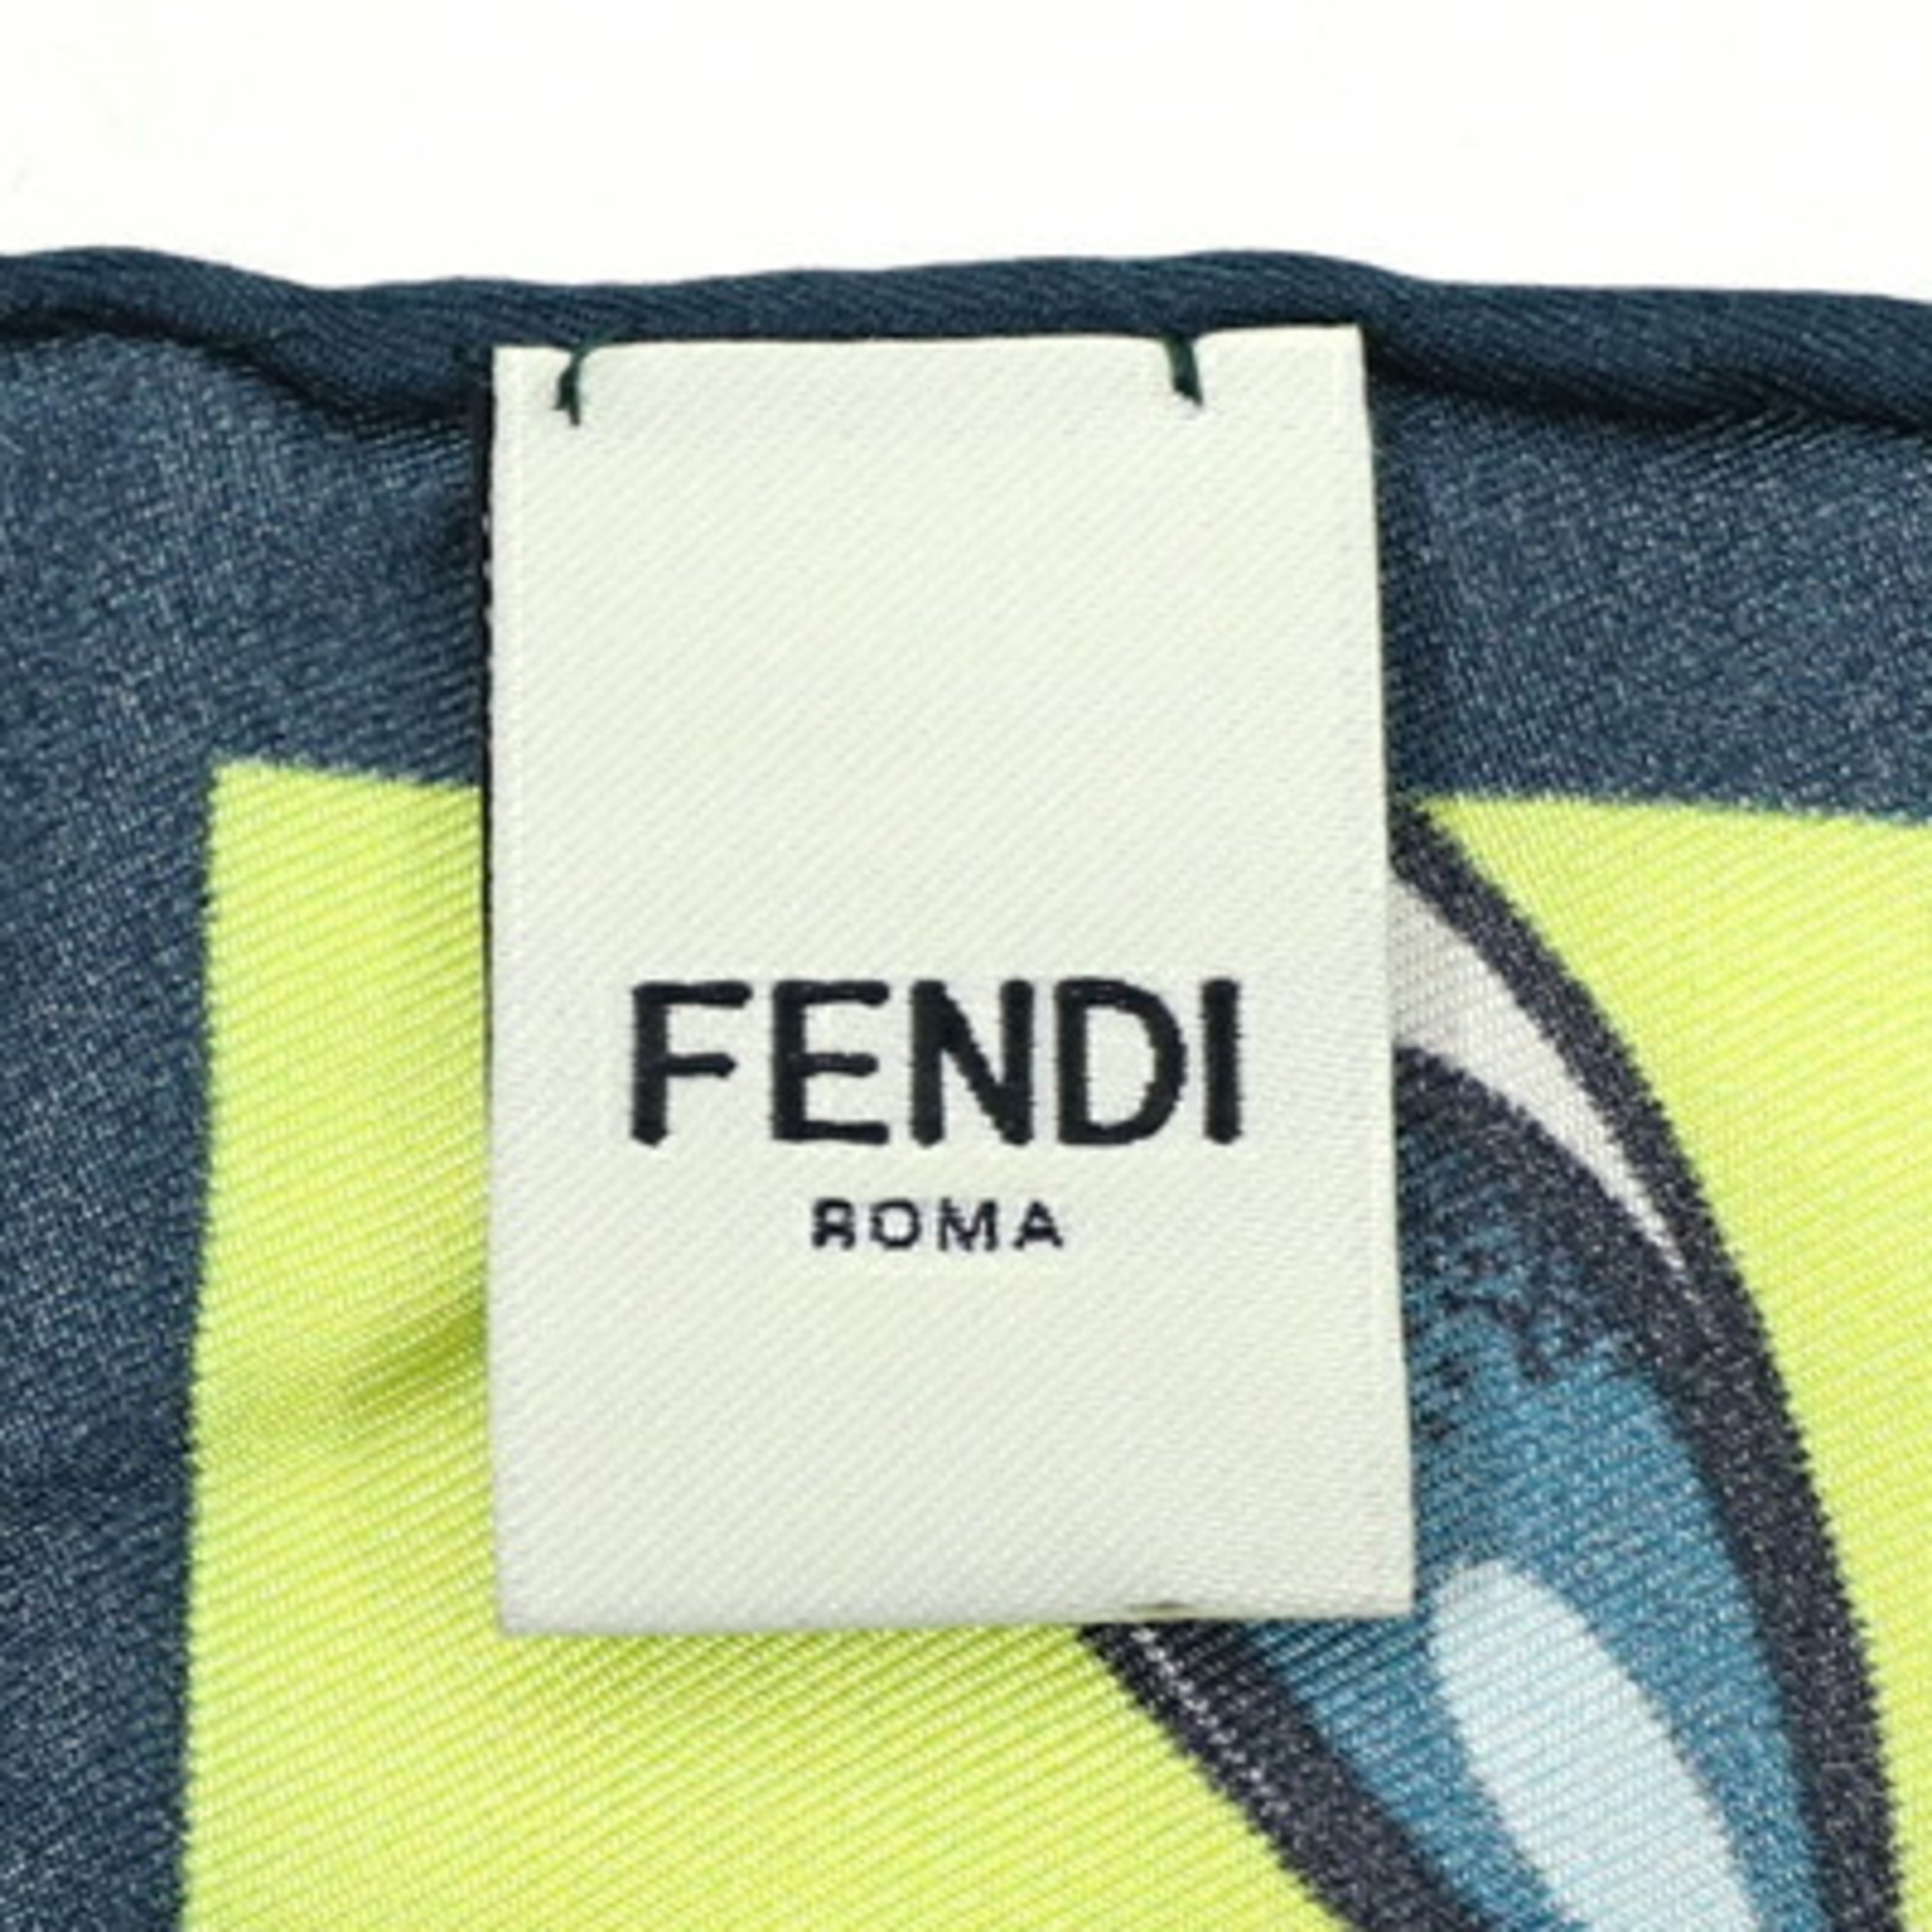 Fendi Scarf Muffler FXT091 Navy Green Neon Yellow 100% Silk Flower Fashion Women's FENDI